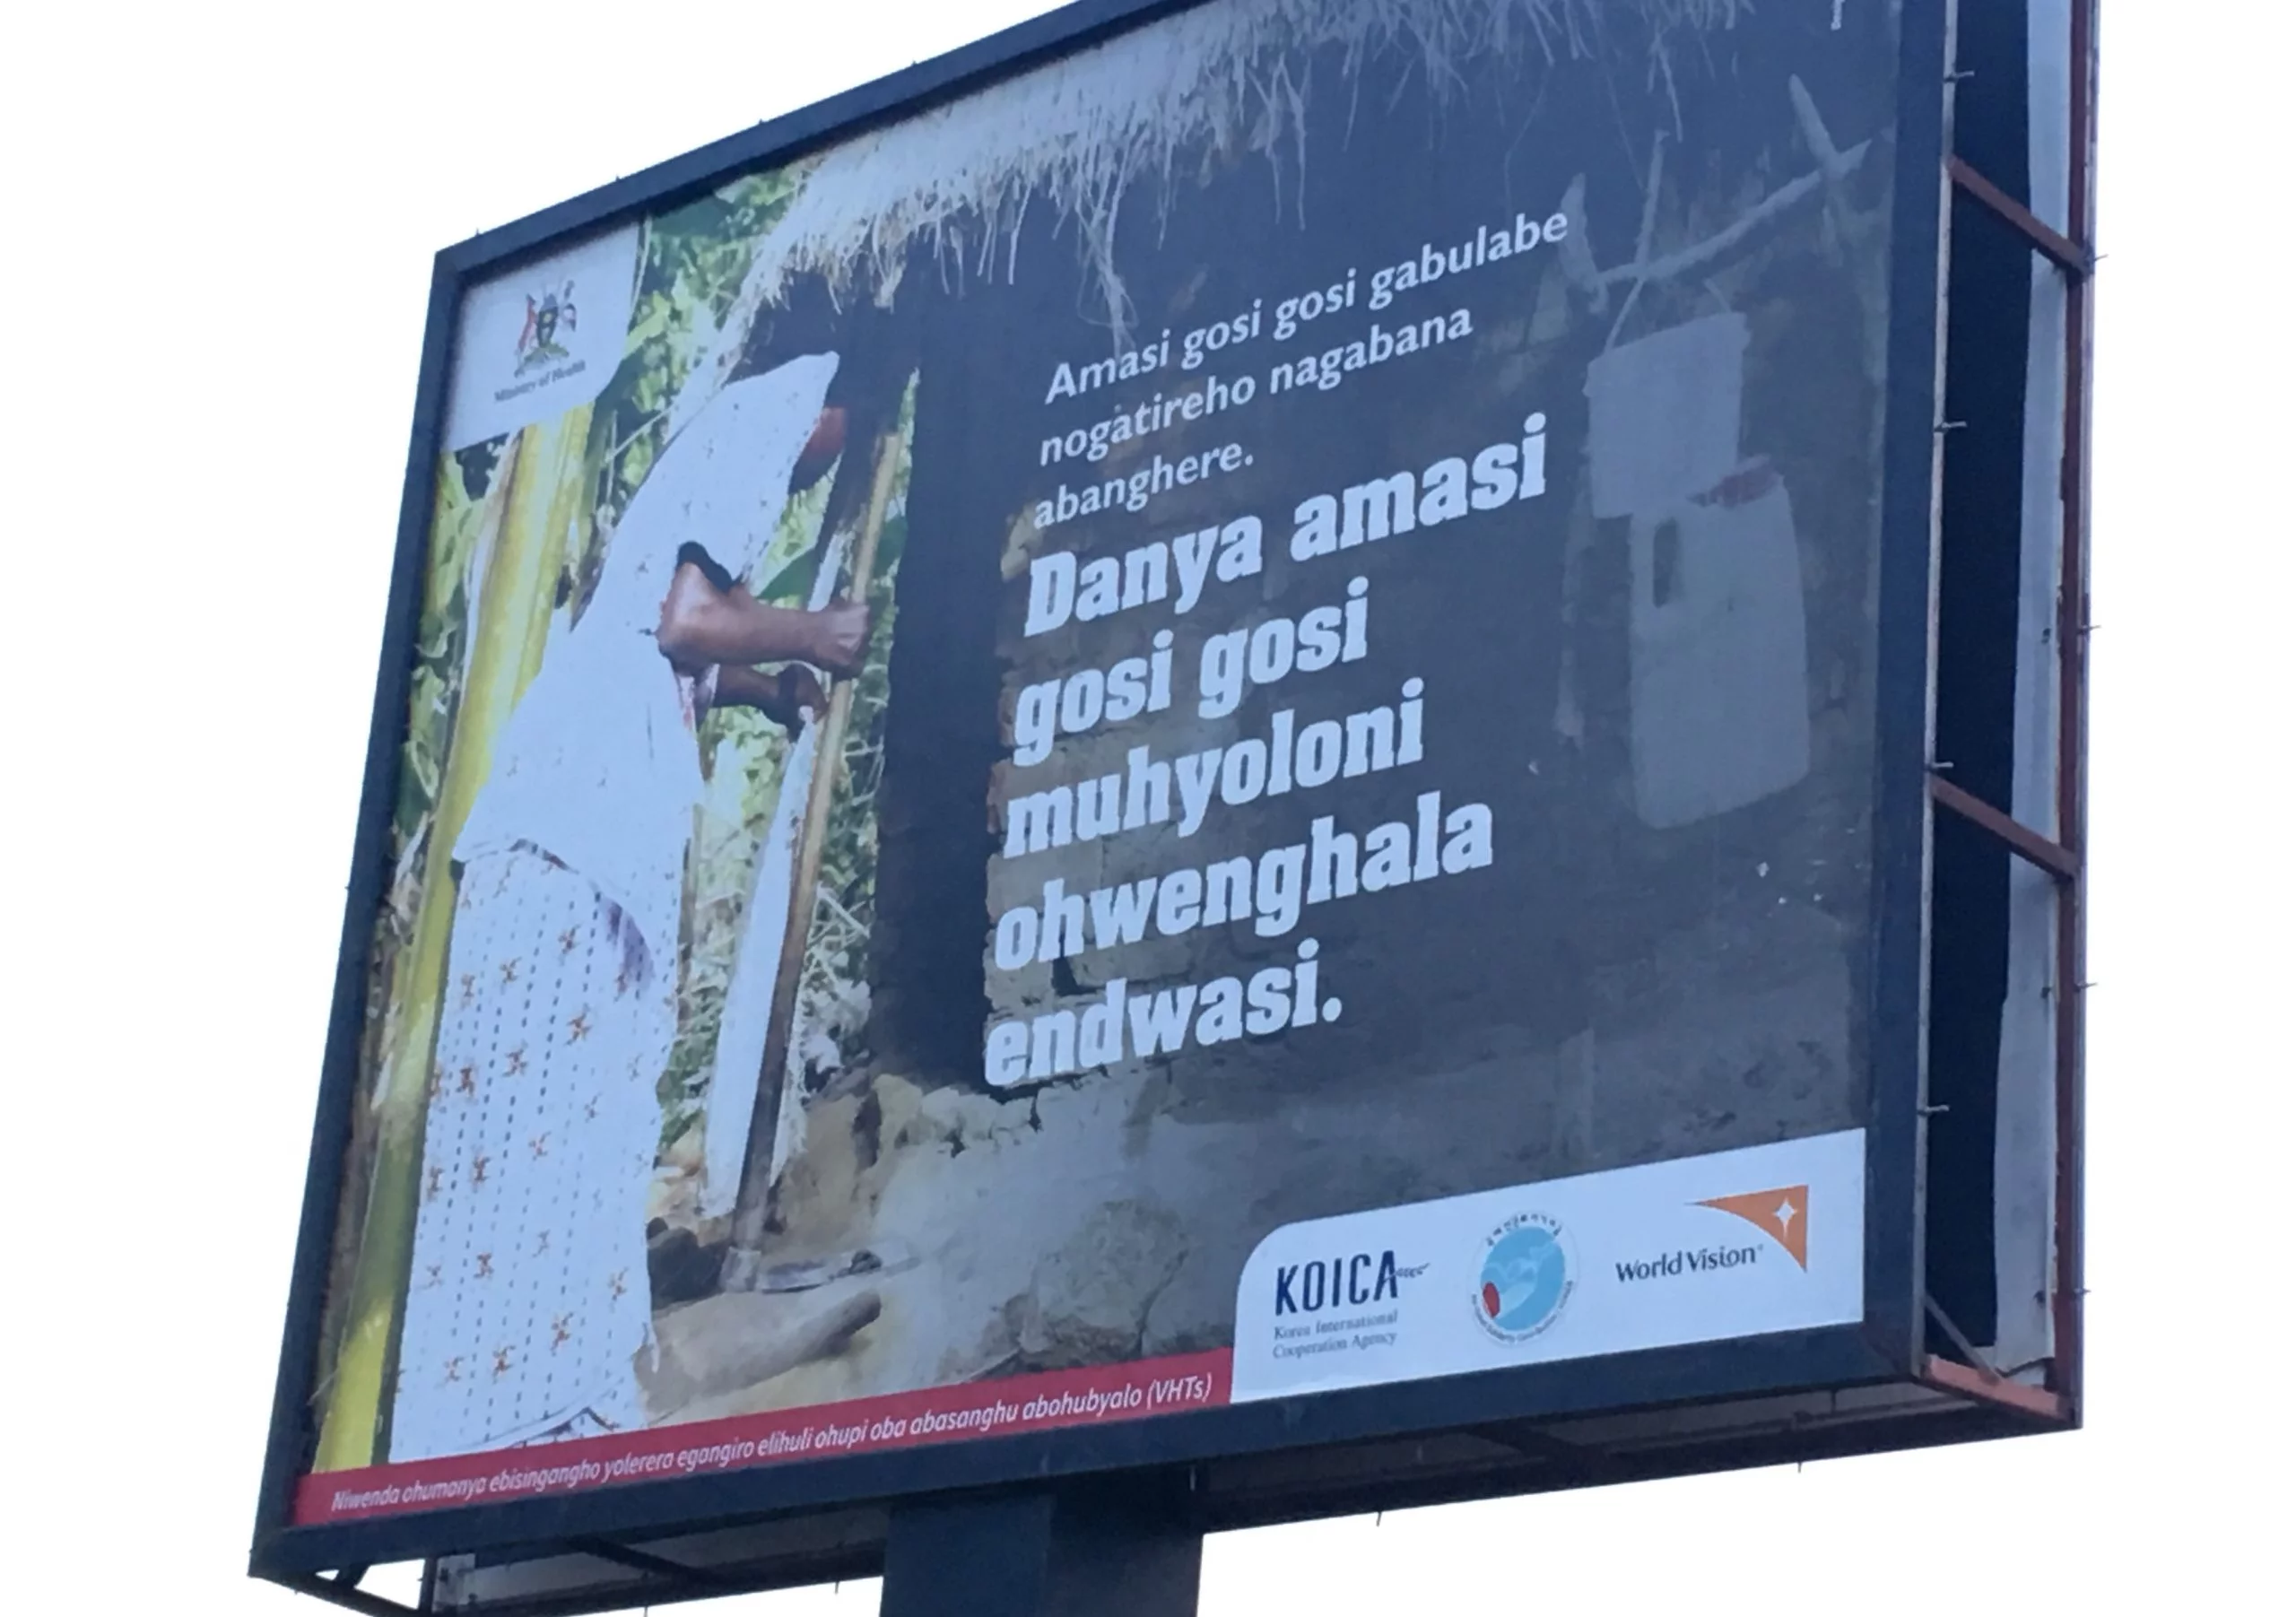 A billboard in Uganda